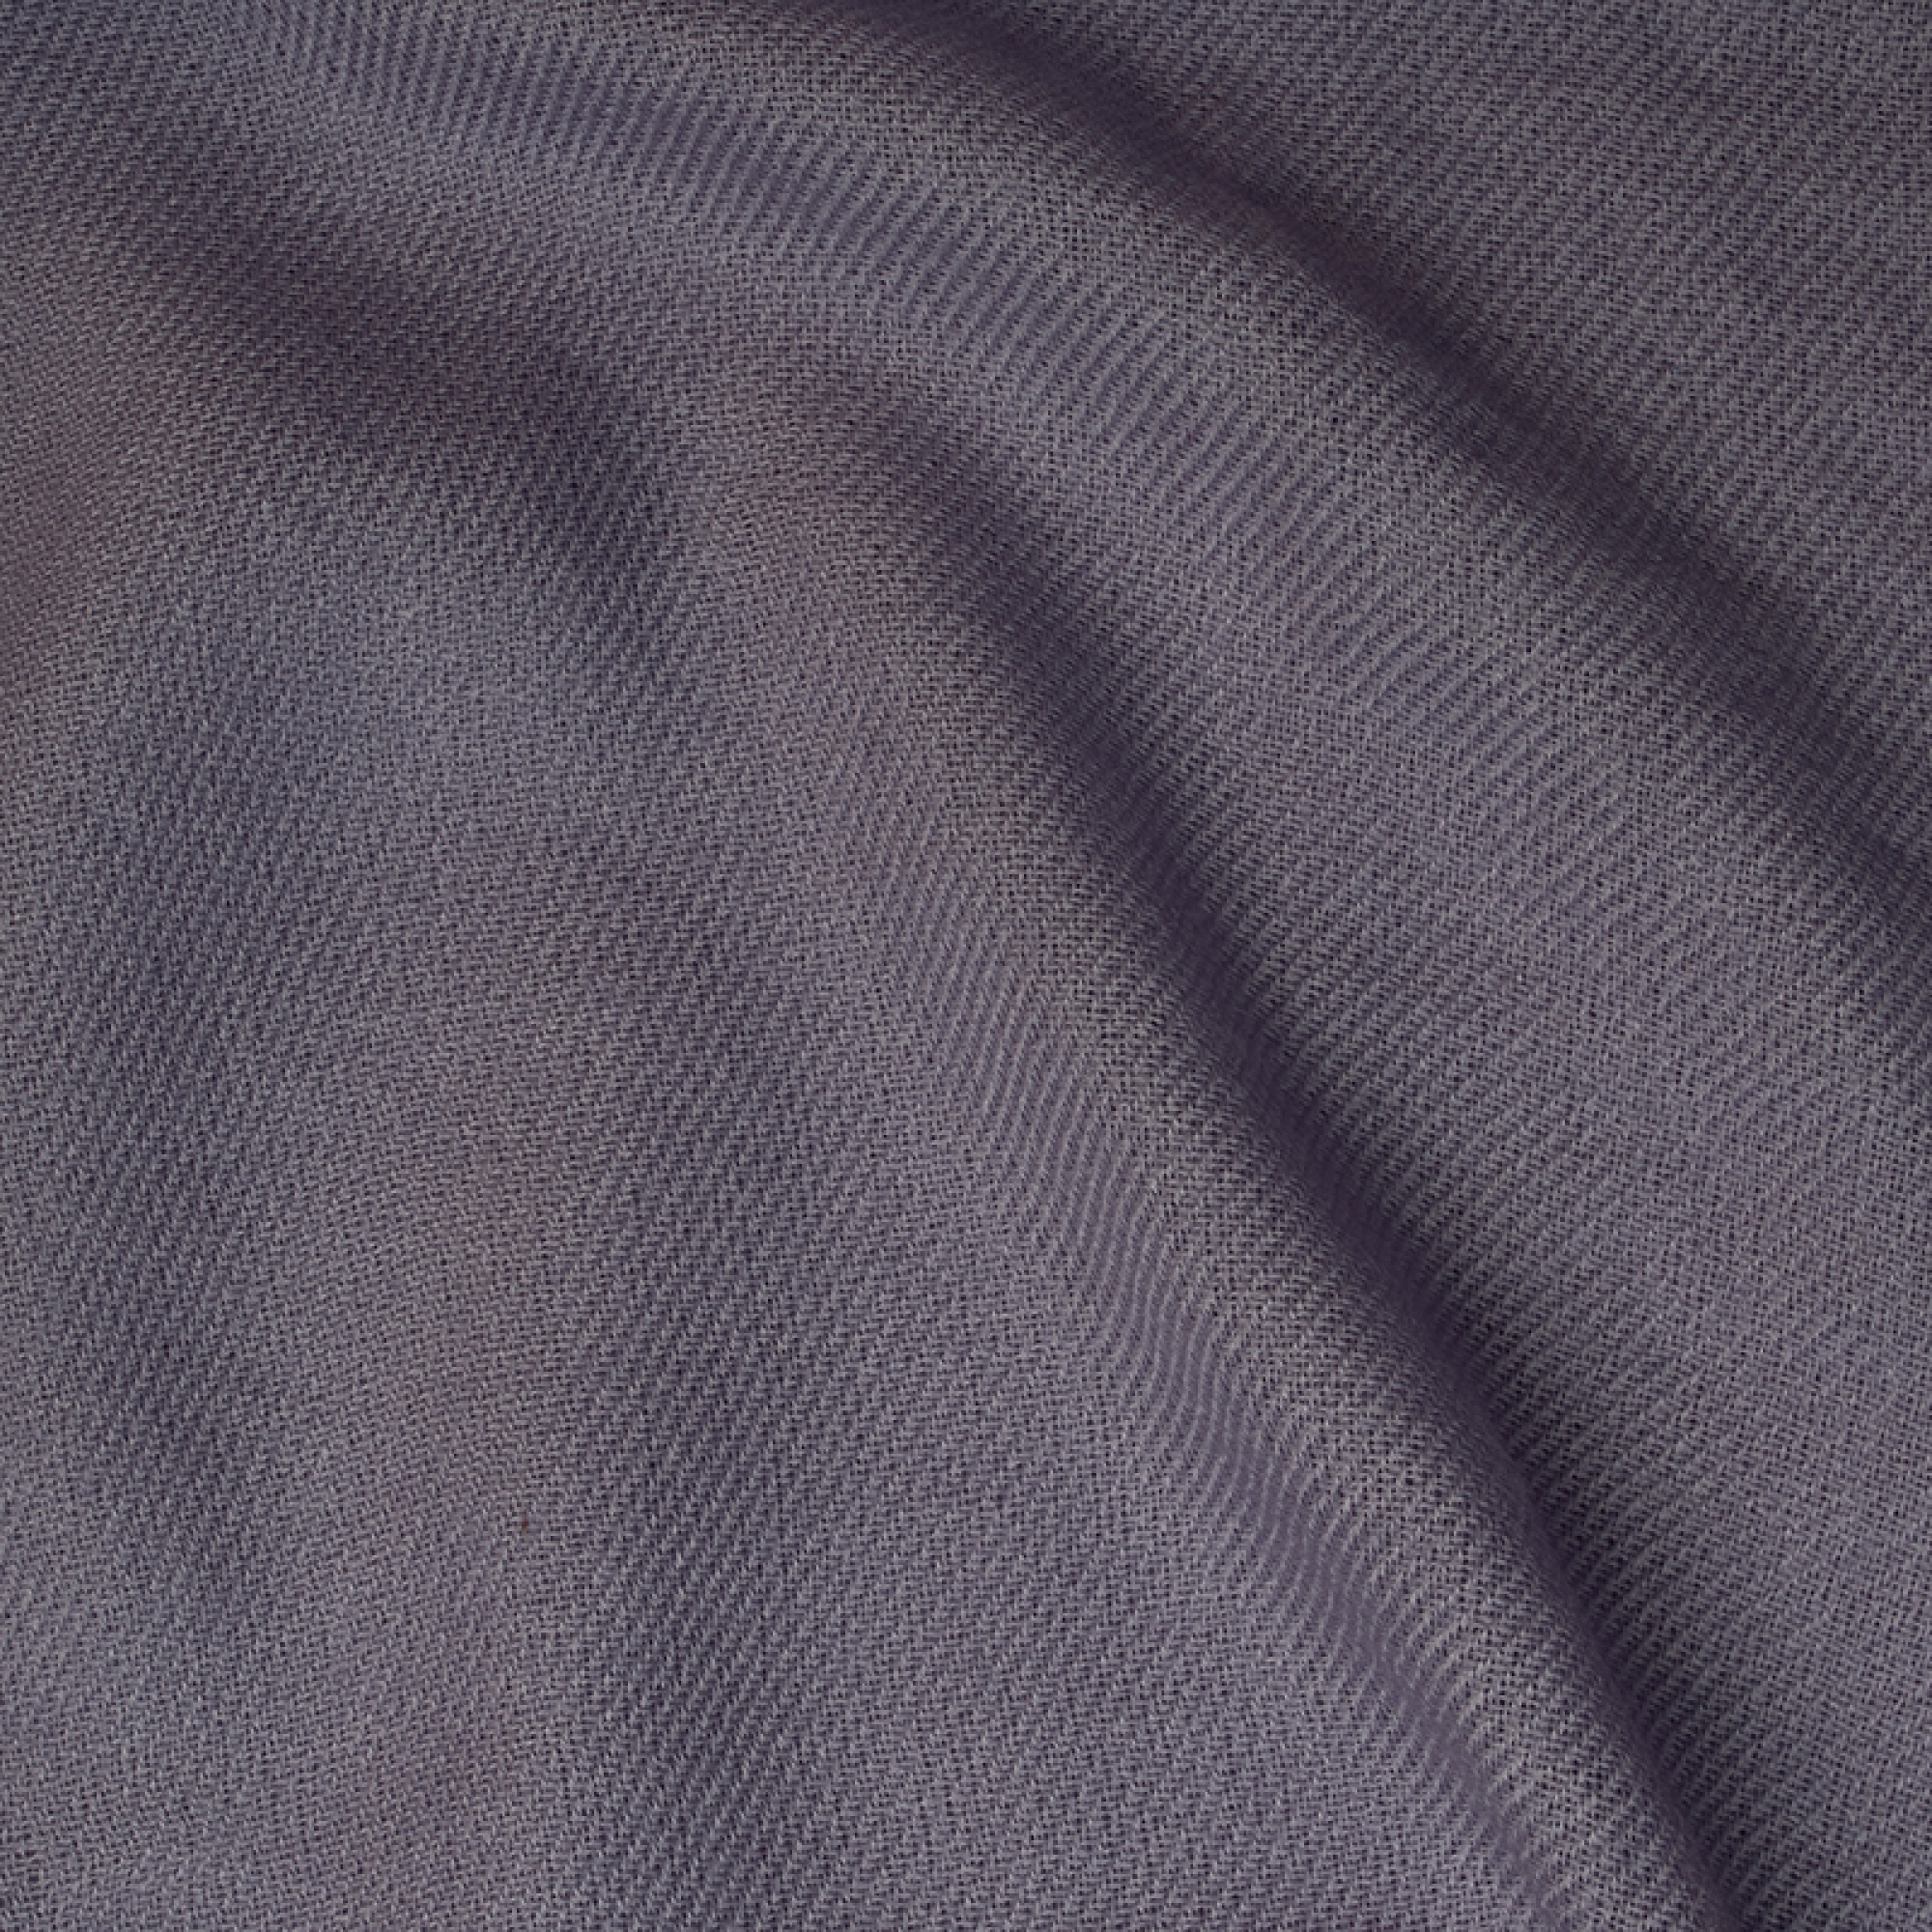 Cashmere accessories blanket toodoo plain l 220 x 220 heirloom lilac 220x220cm